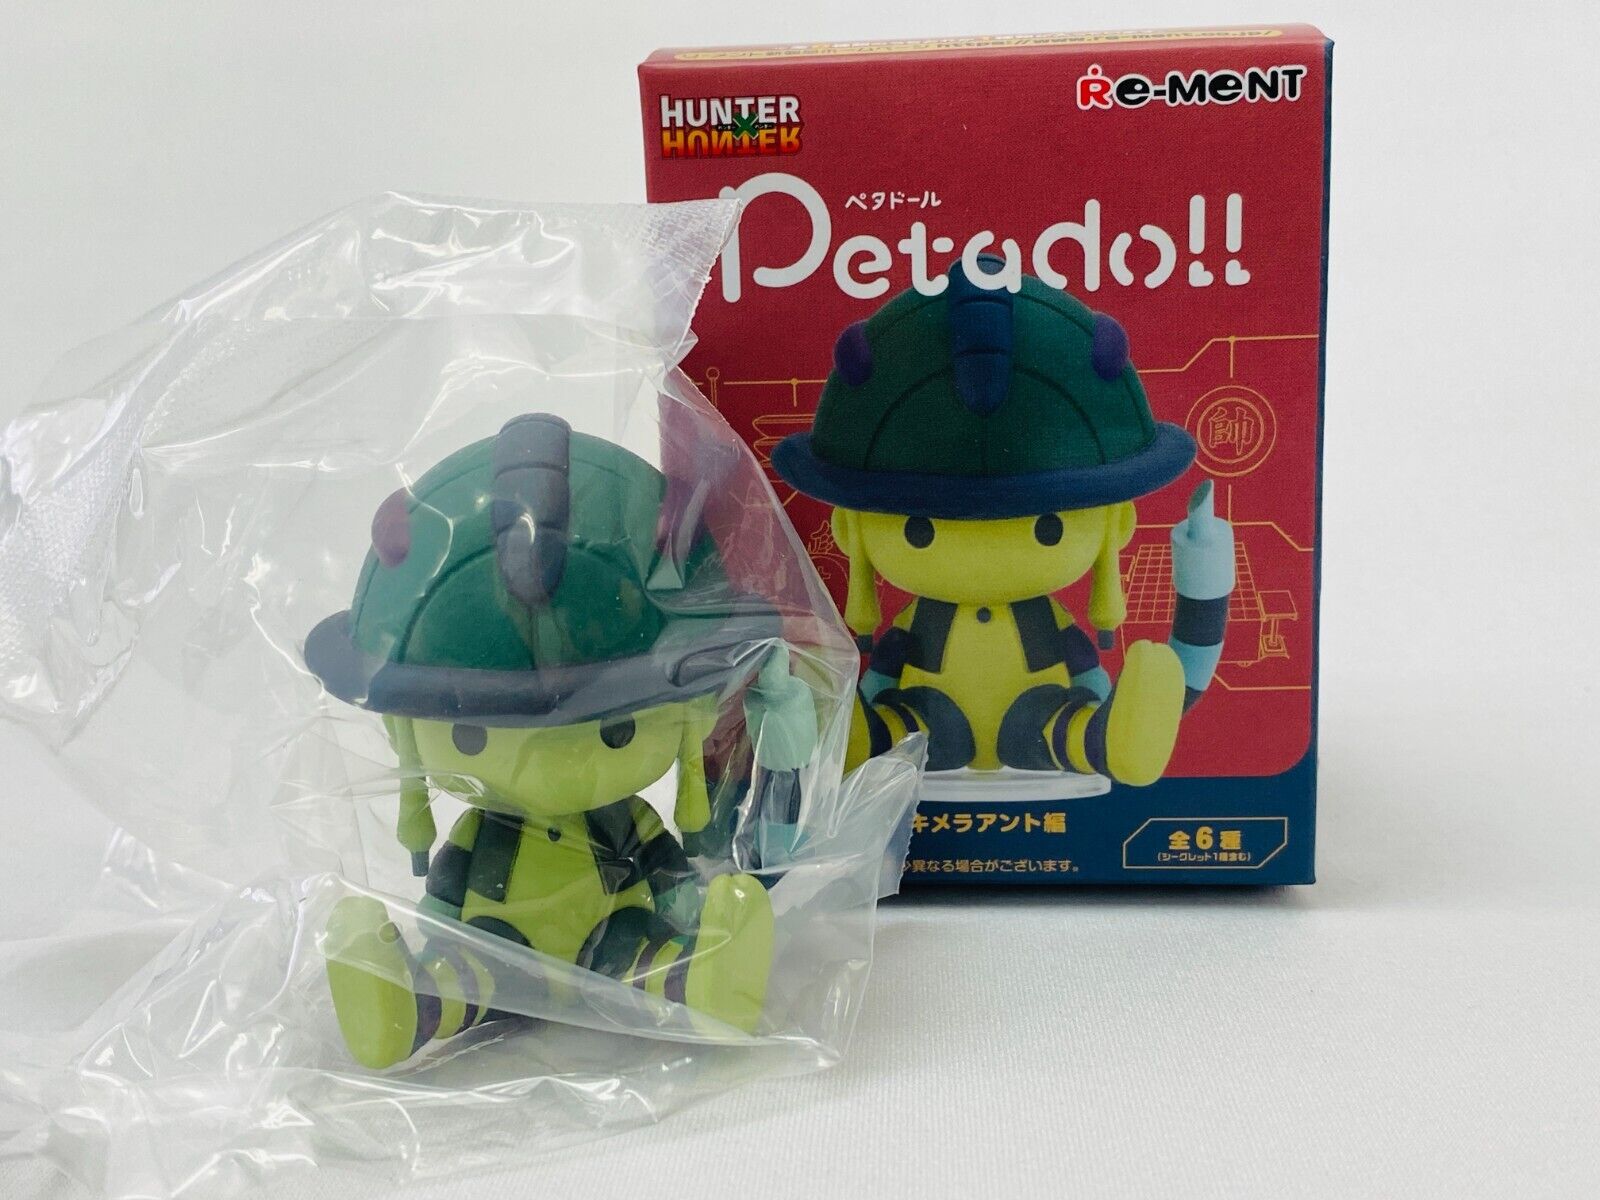 RE-MENT petadoll Hunter x Hunter / 1. Meruem / Collection Toy figure New Japan